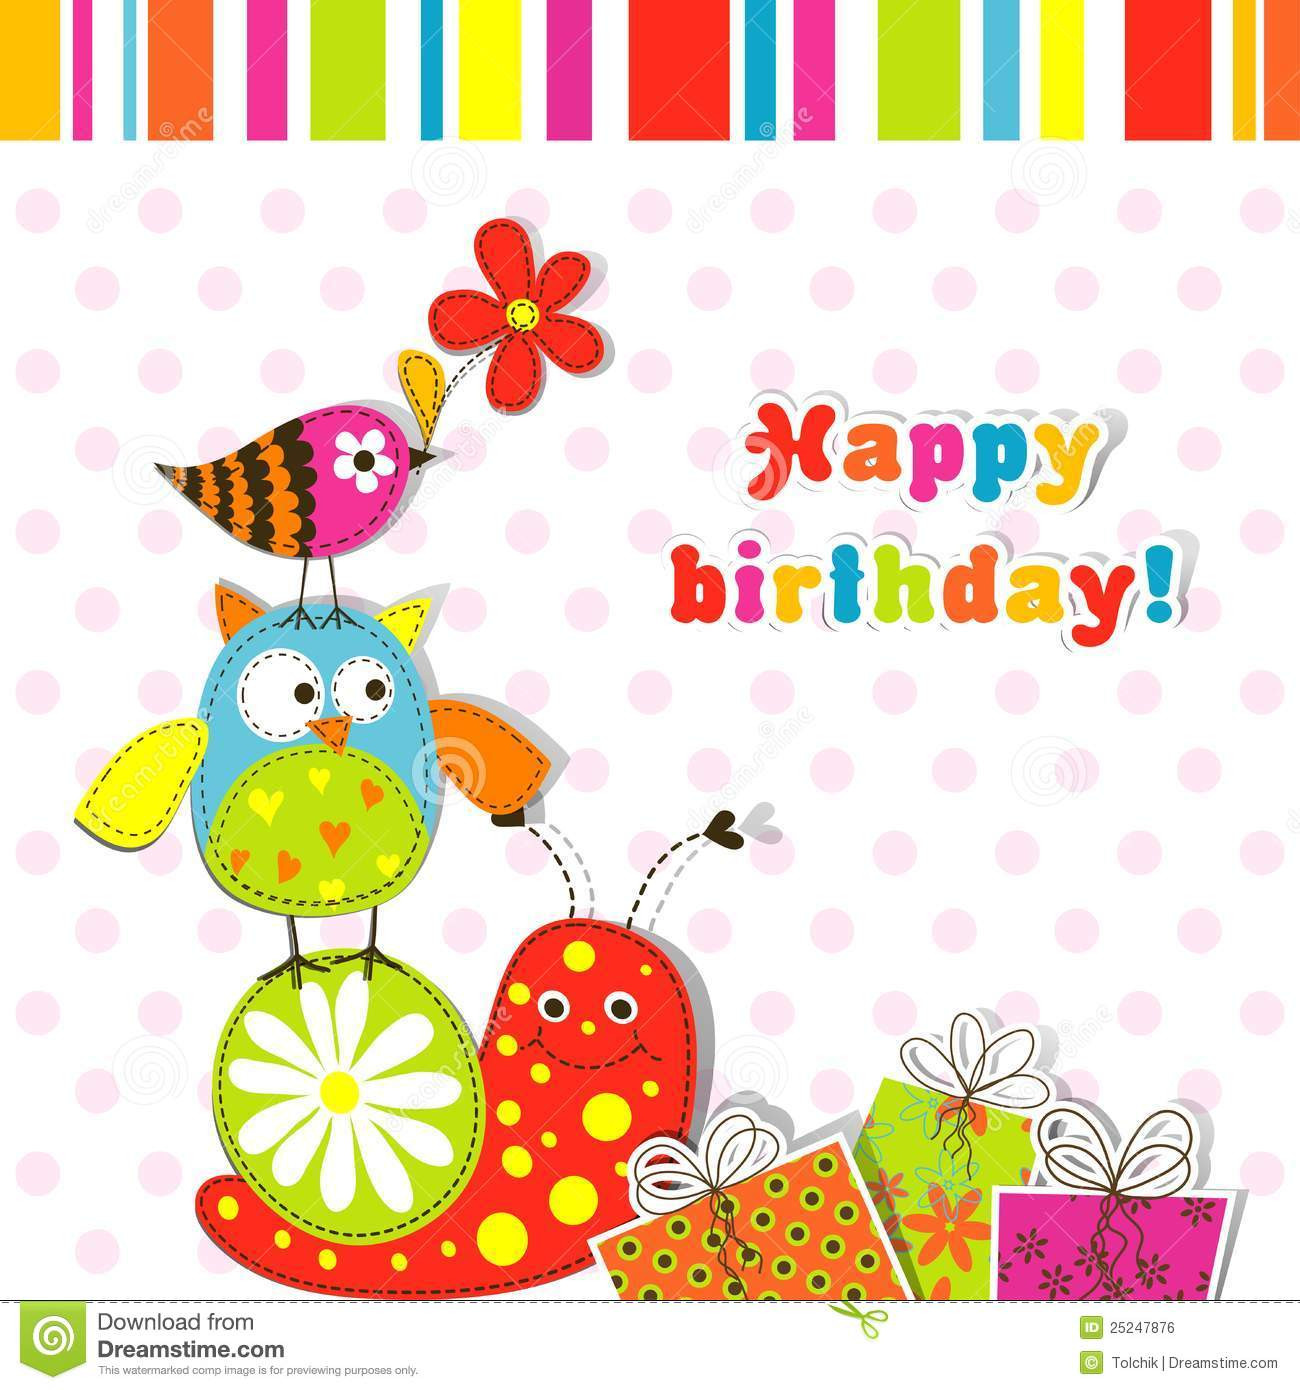 Printable Happy Birthday Card
 Birthday Card Template